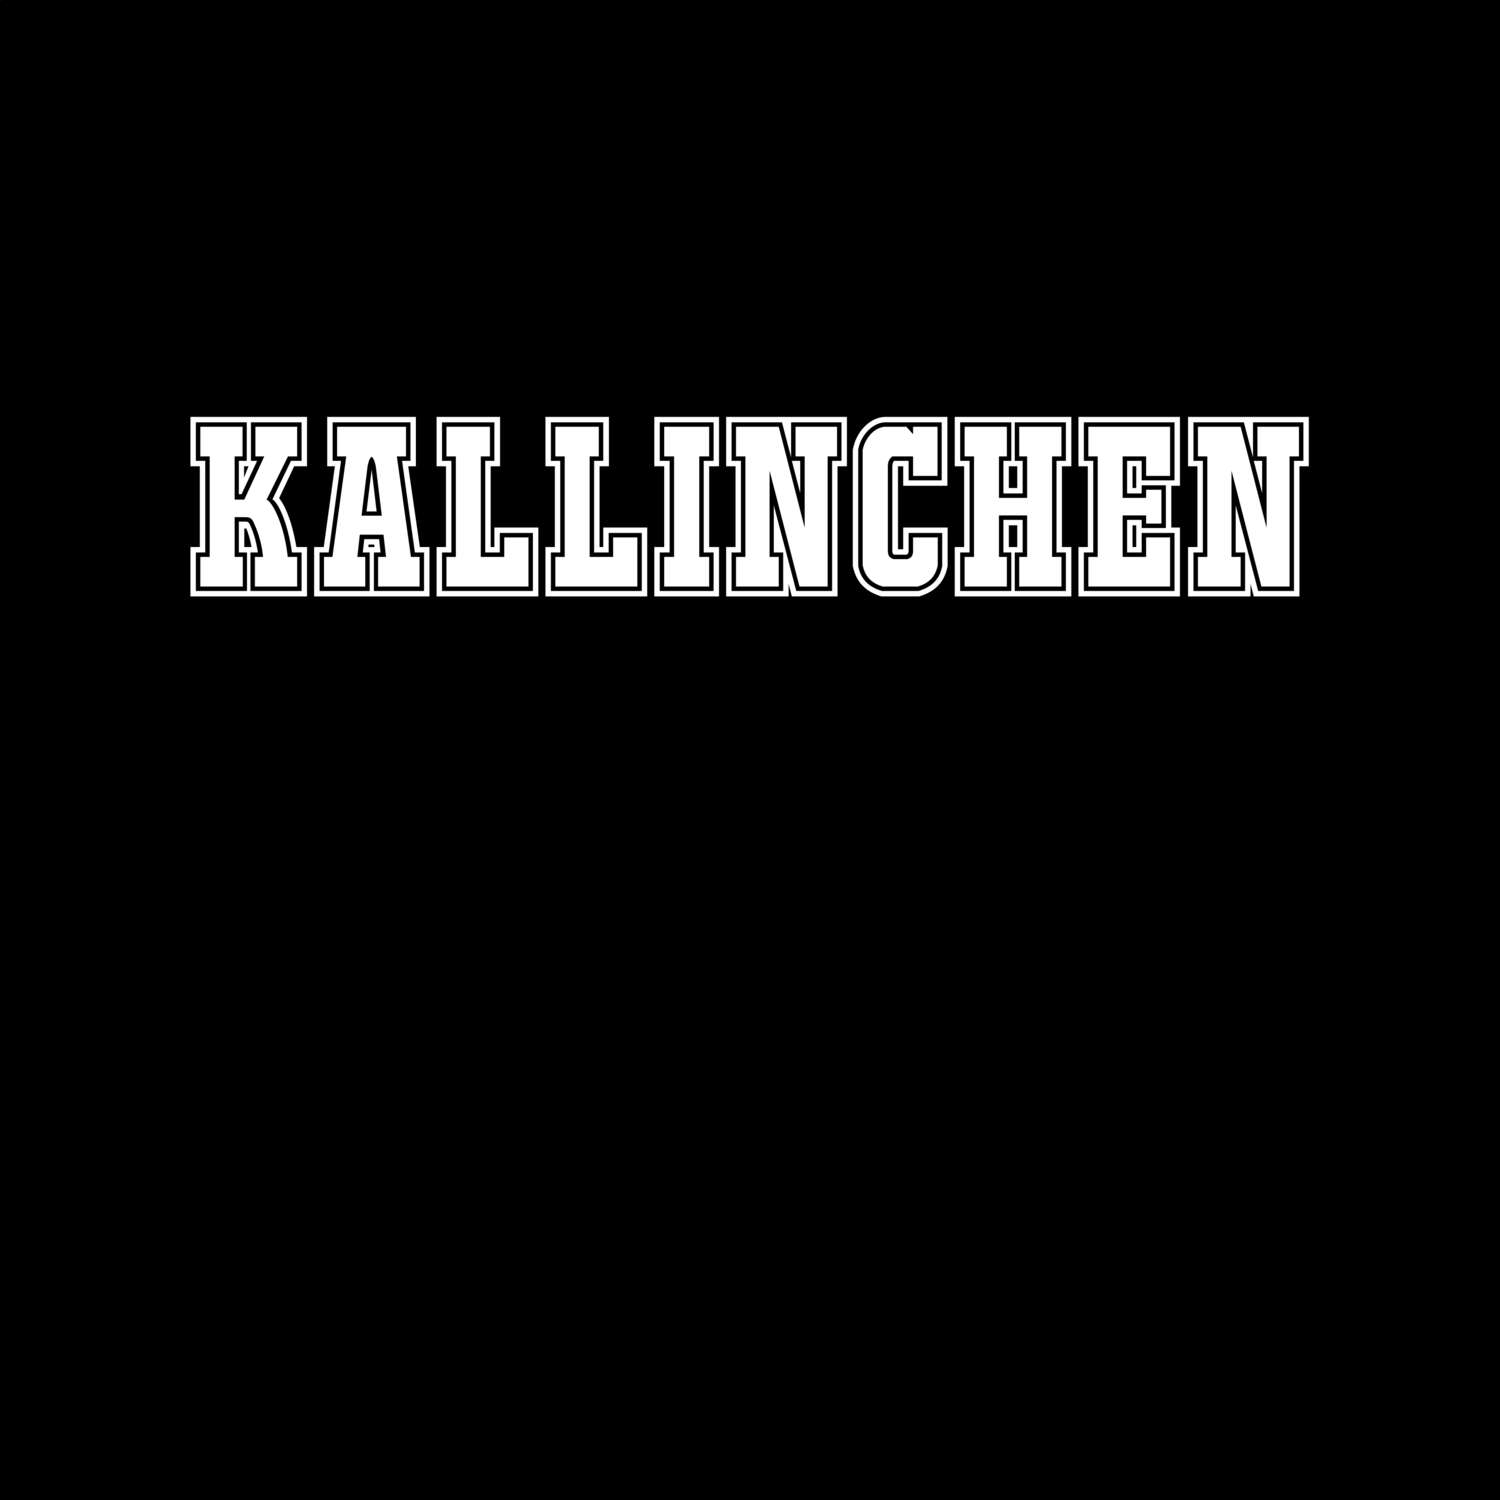 Kallinchen T-Shirt »Classic«